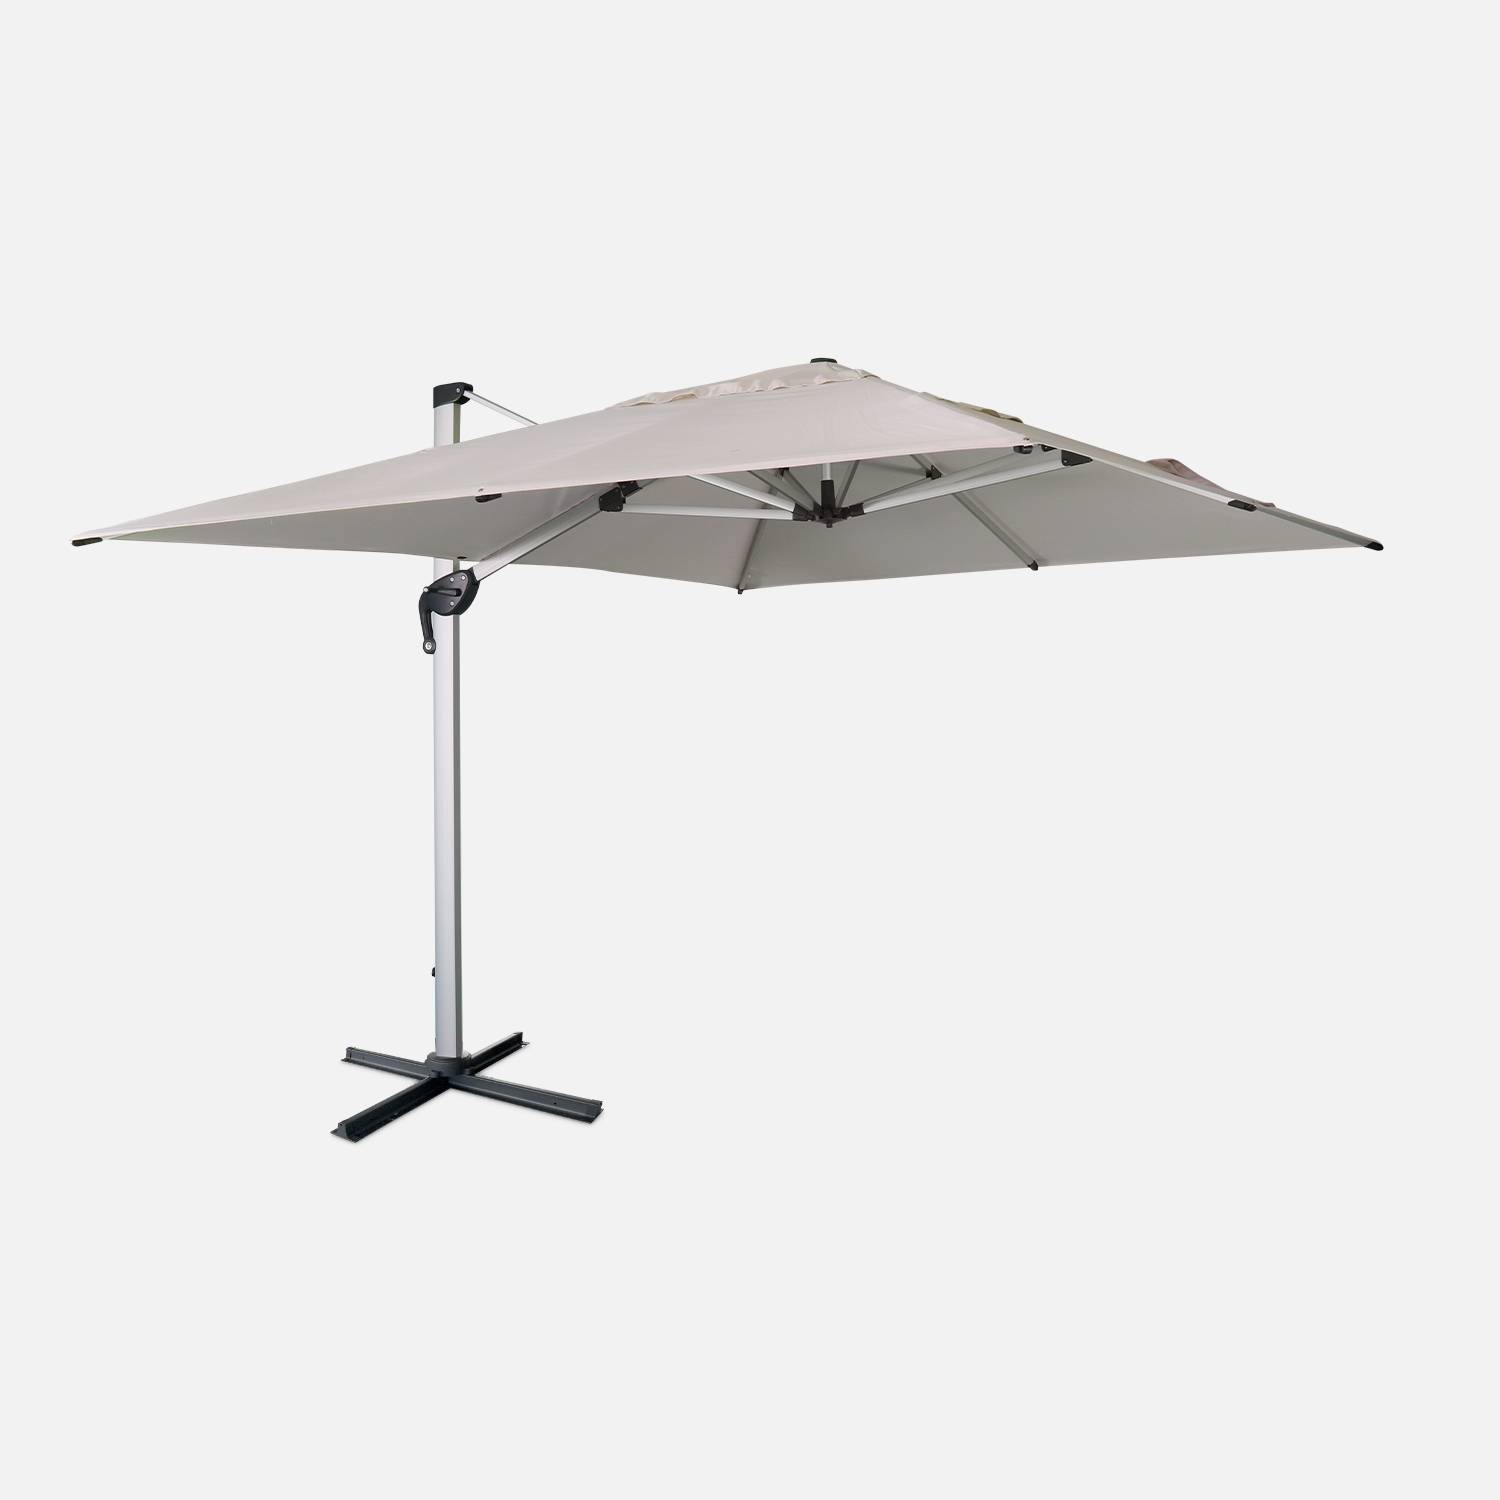 Hochwertiger Ampelschirm 3x4m - PYLA Beige - Sunbrella ® Tuch, Aluminiumgestell, drehbar | sweeek